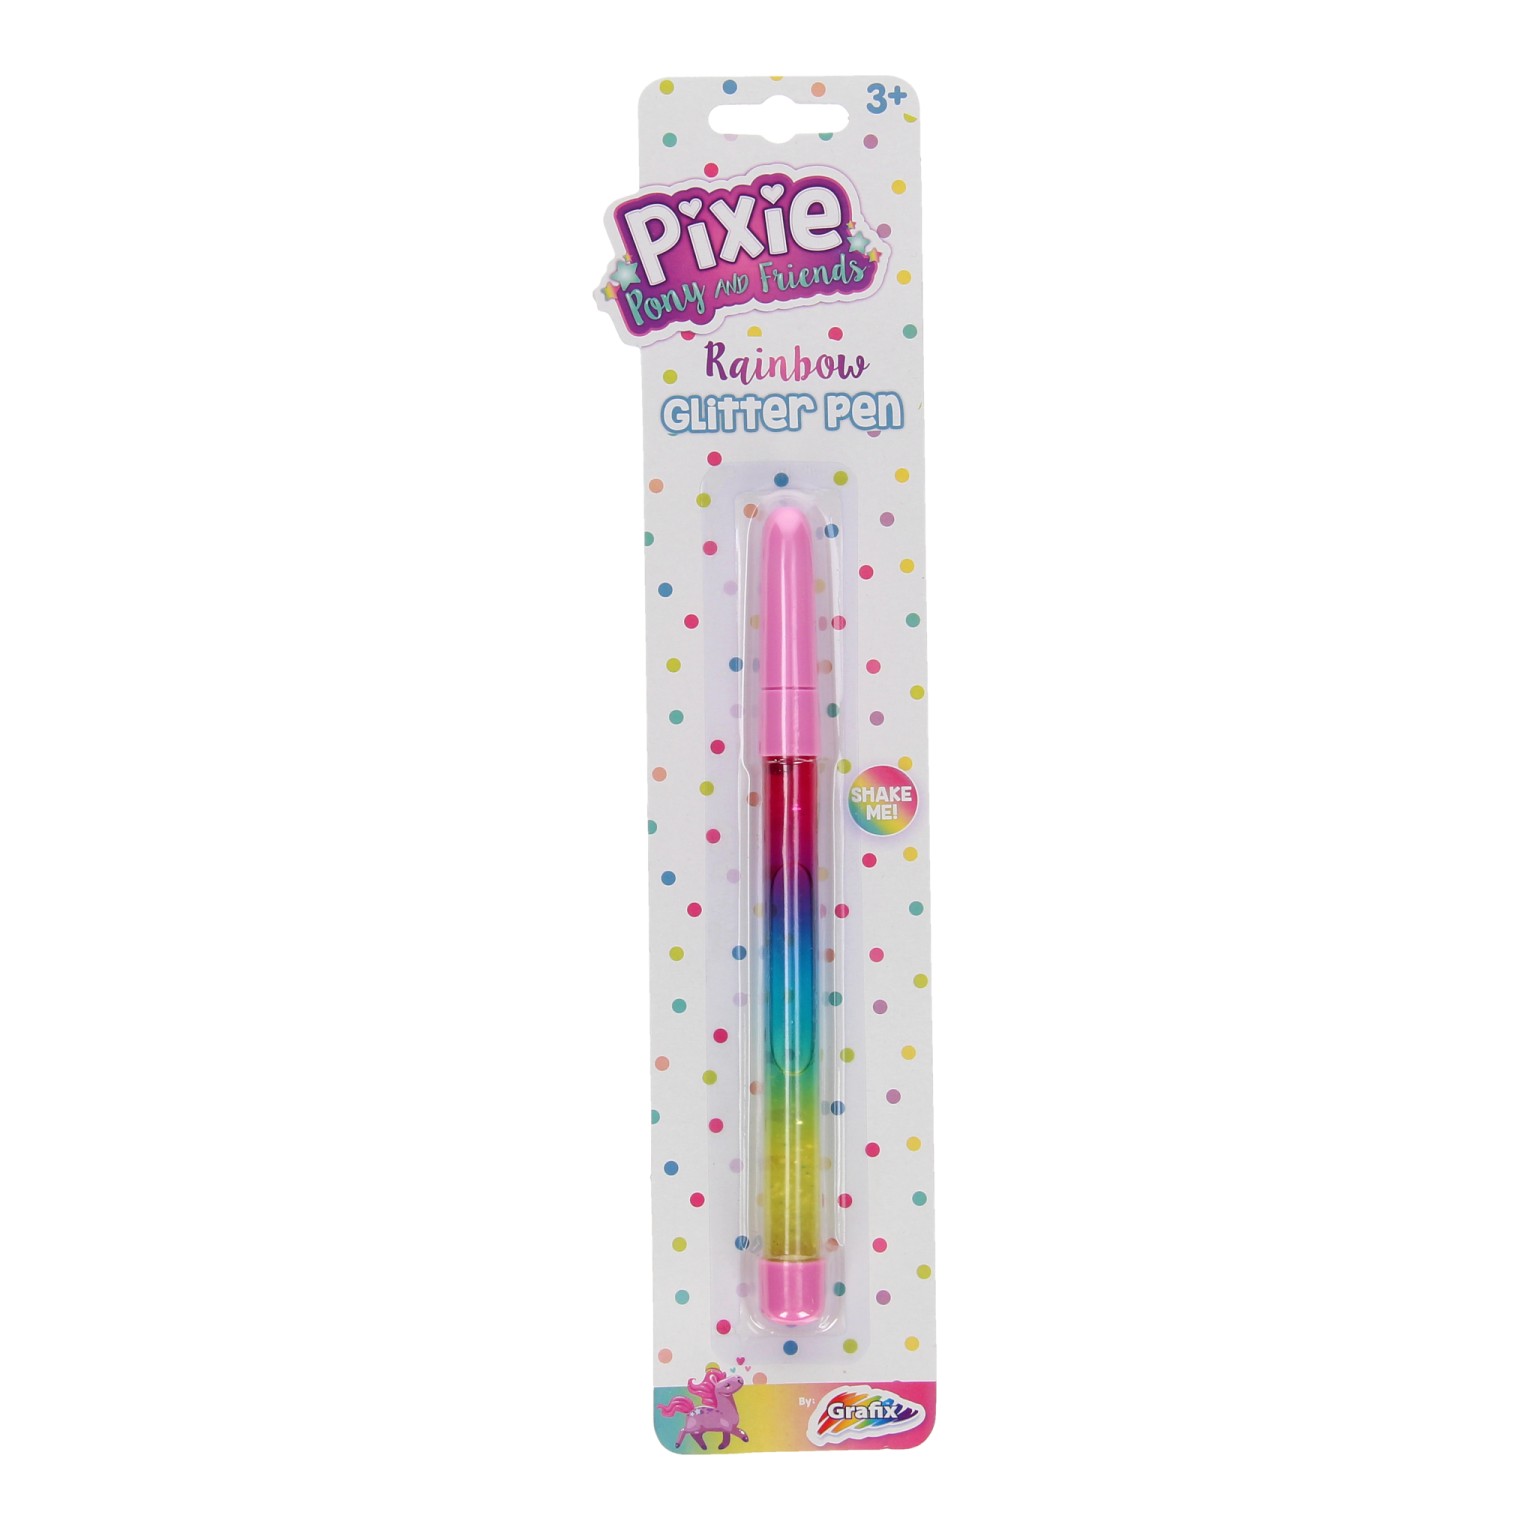 Pixie Glitter Pen